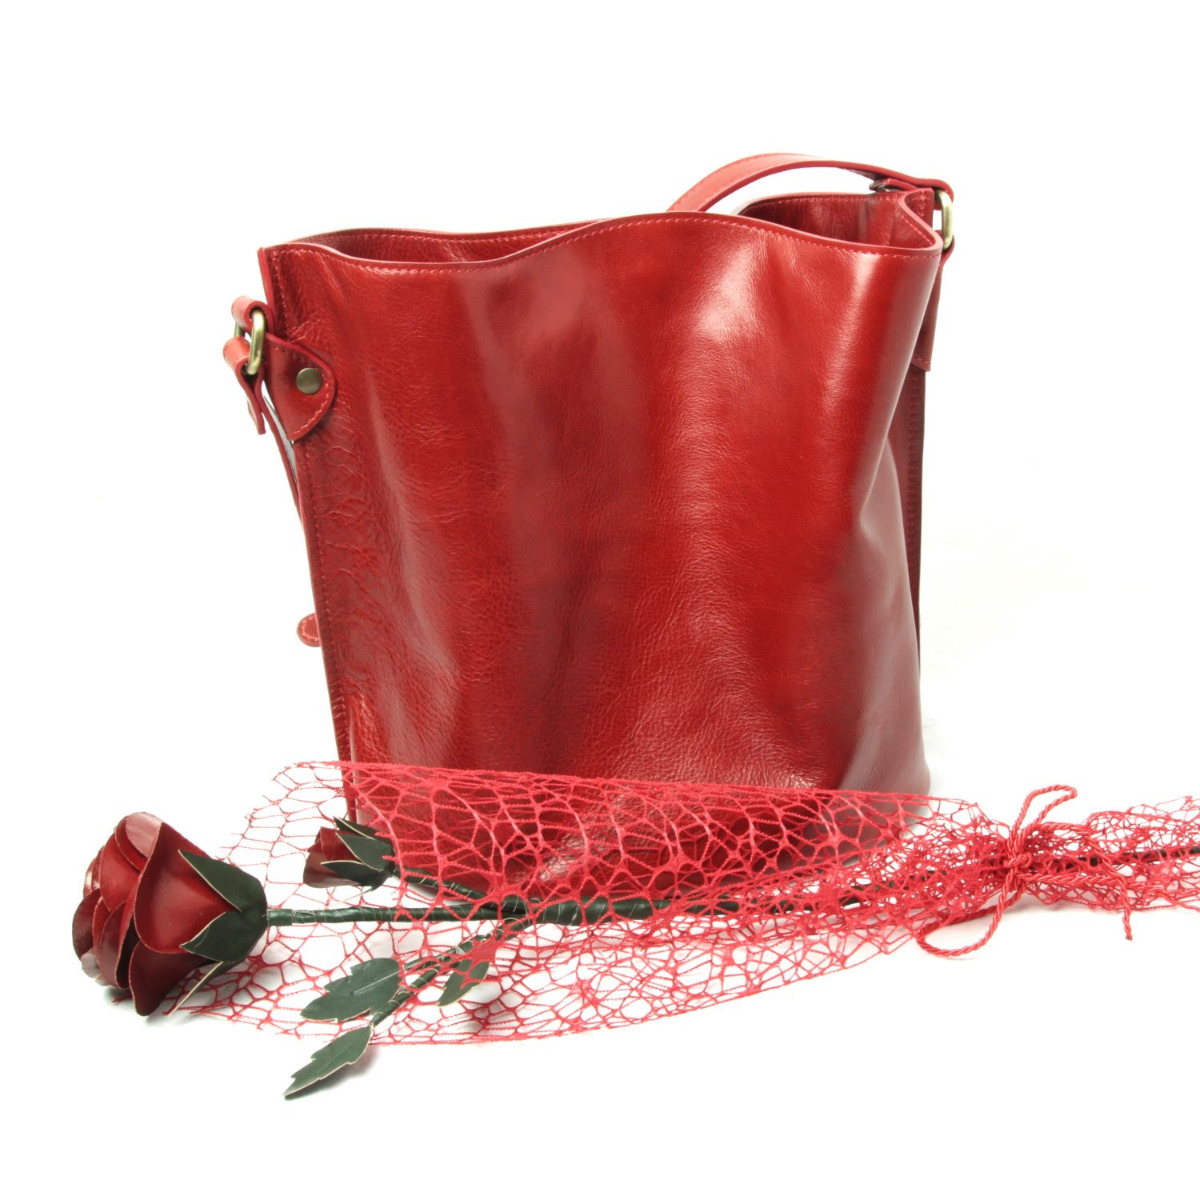 Full grain leather shoulder bag with leather red rose |205405SV|Old Angler Firenze